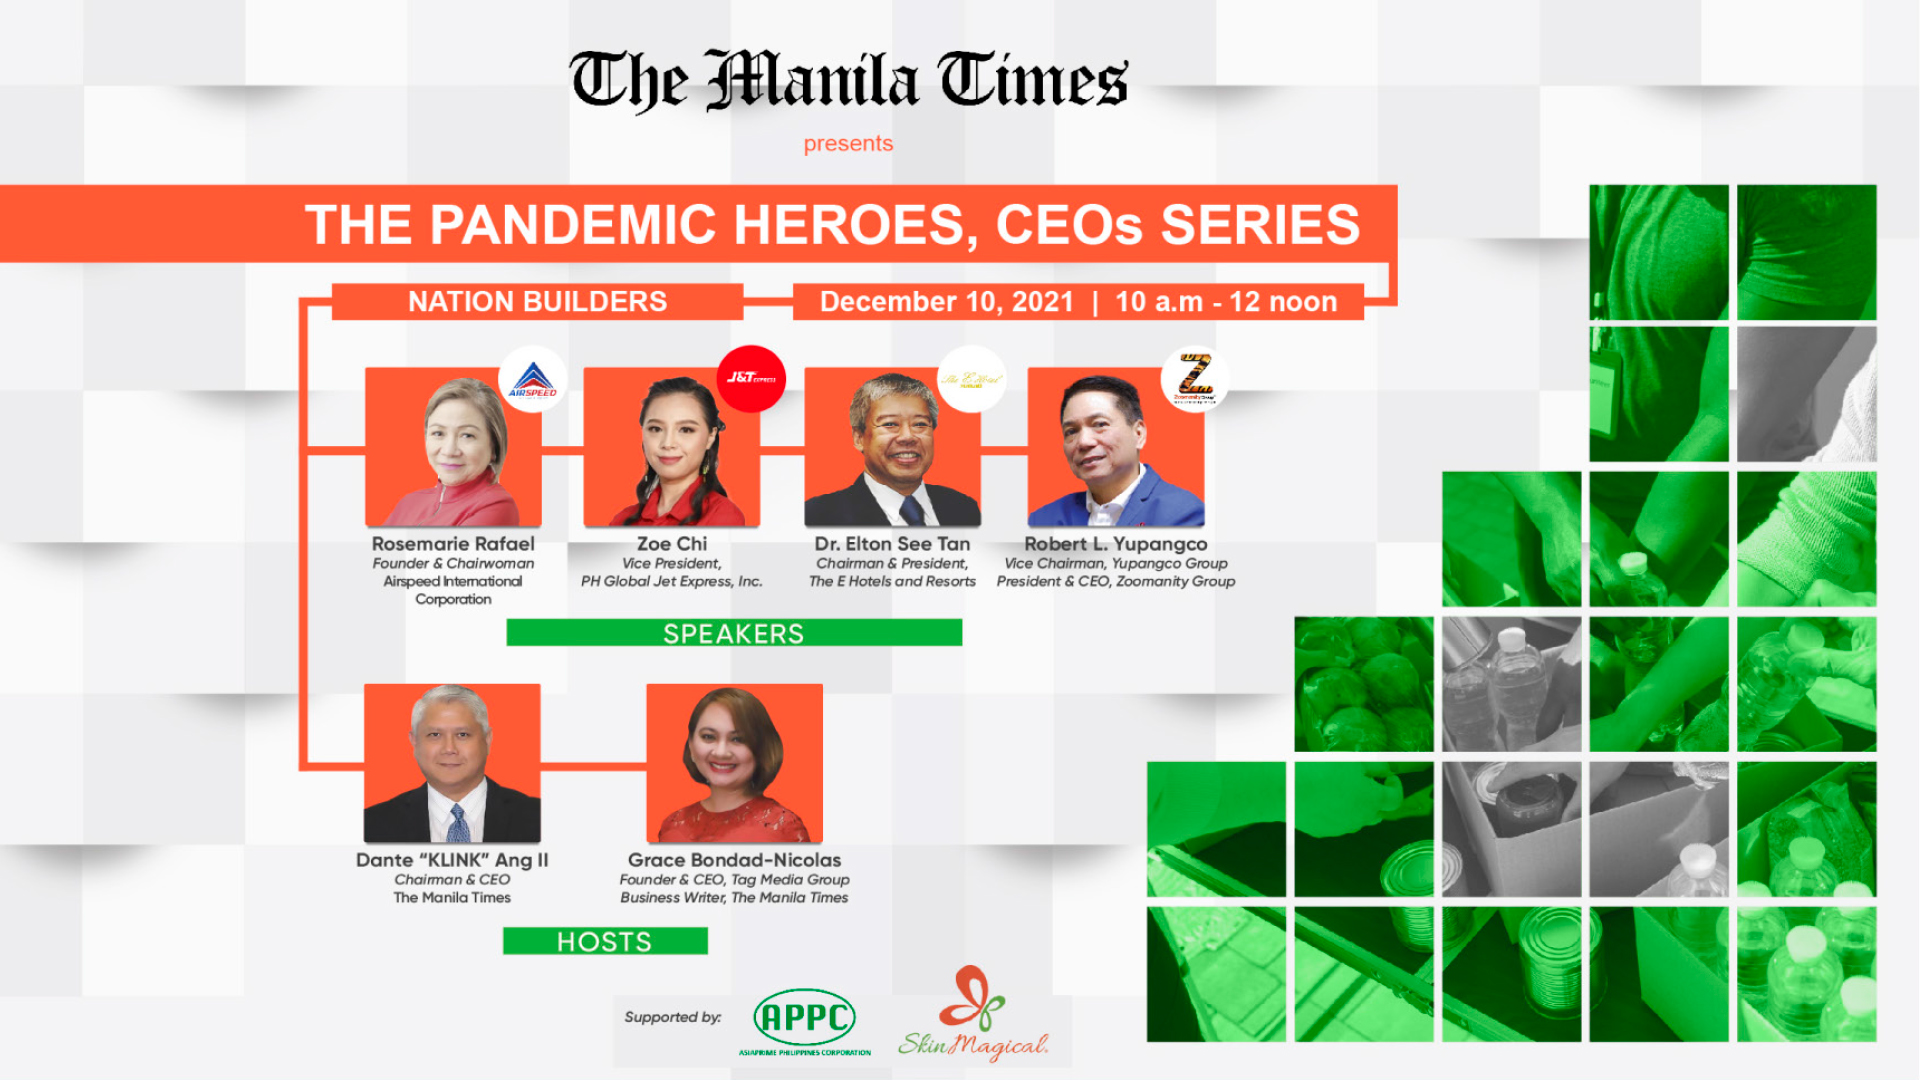 THE PANDEMIC HEROES, CEOs, SERIES